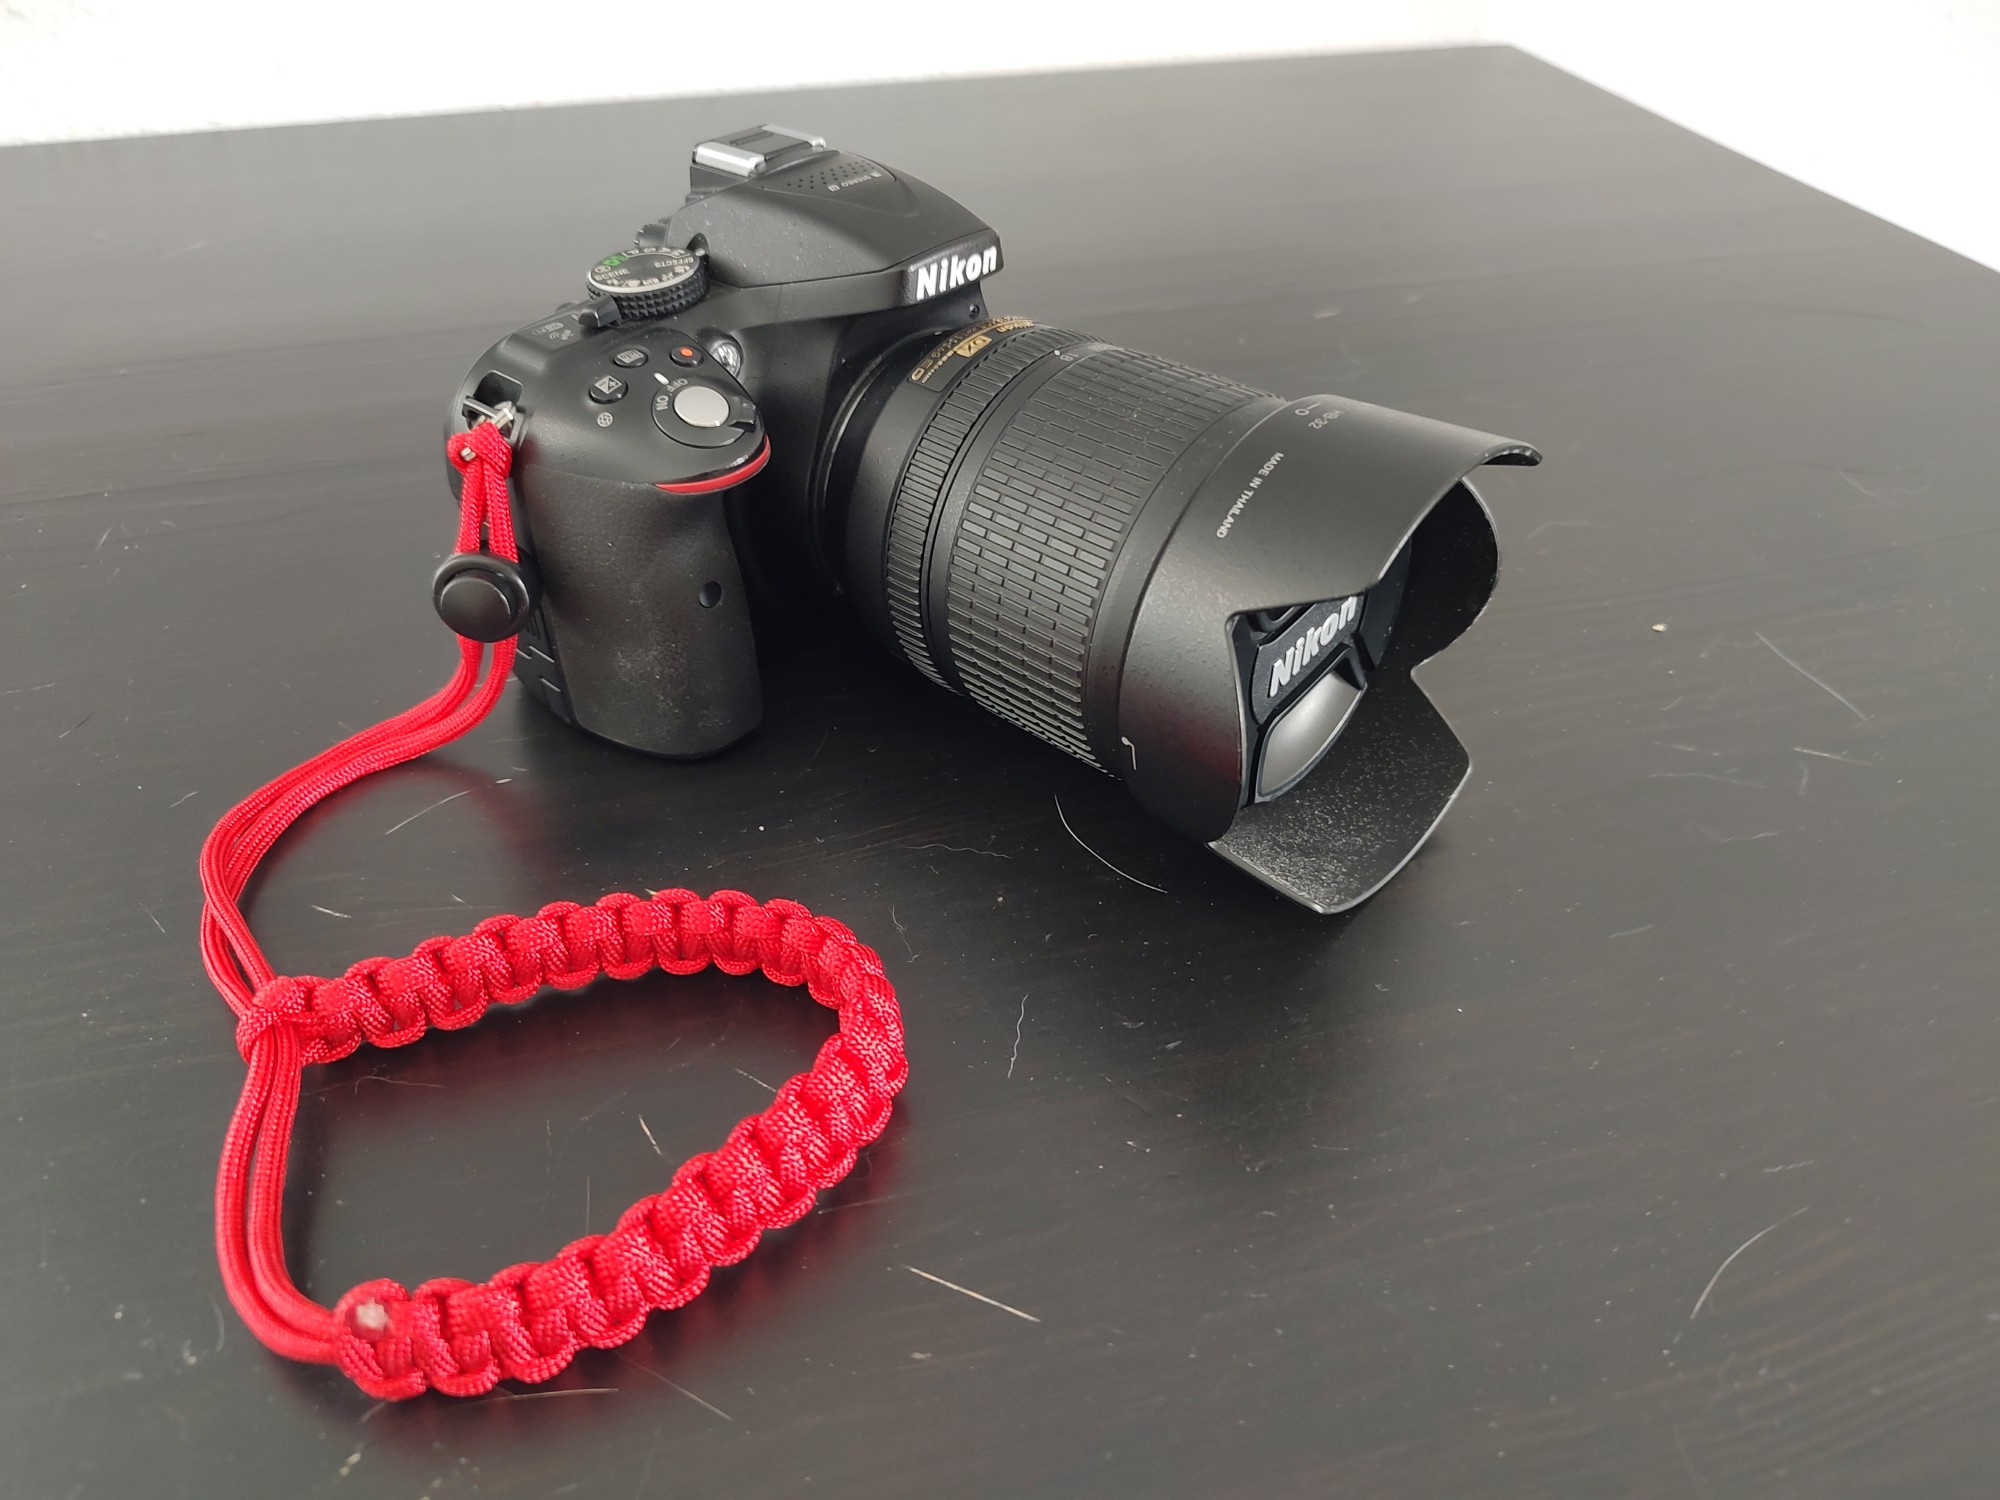 Nikon D5300 – meine erste Kamera